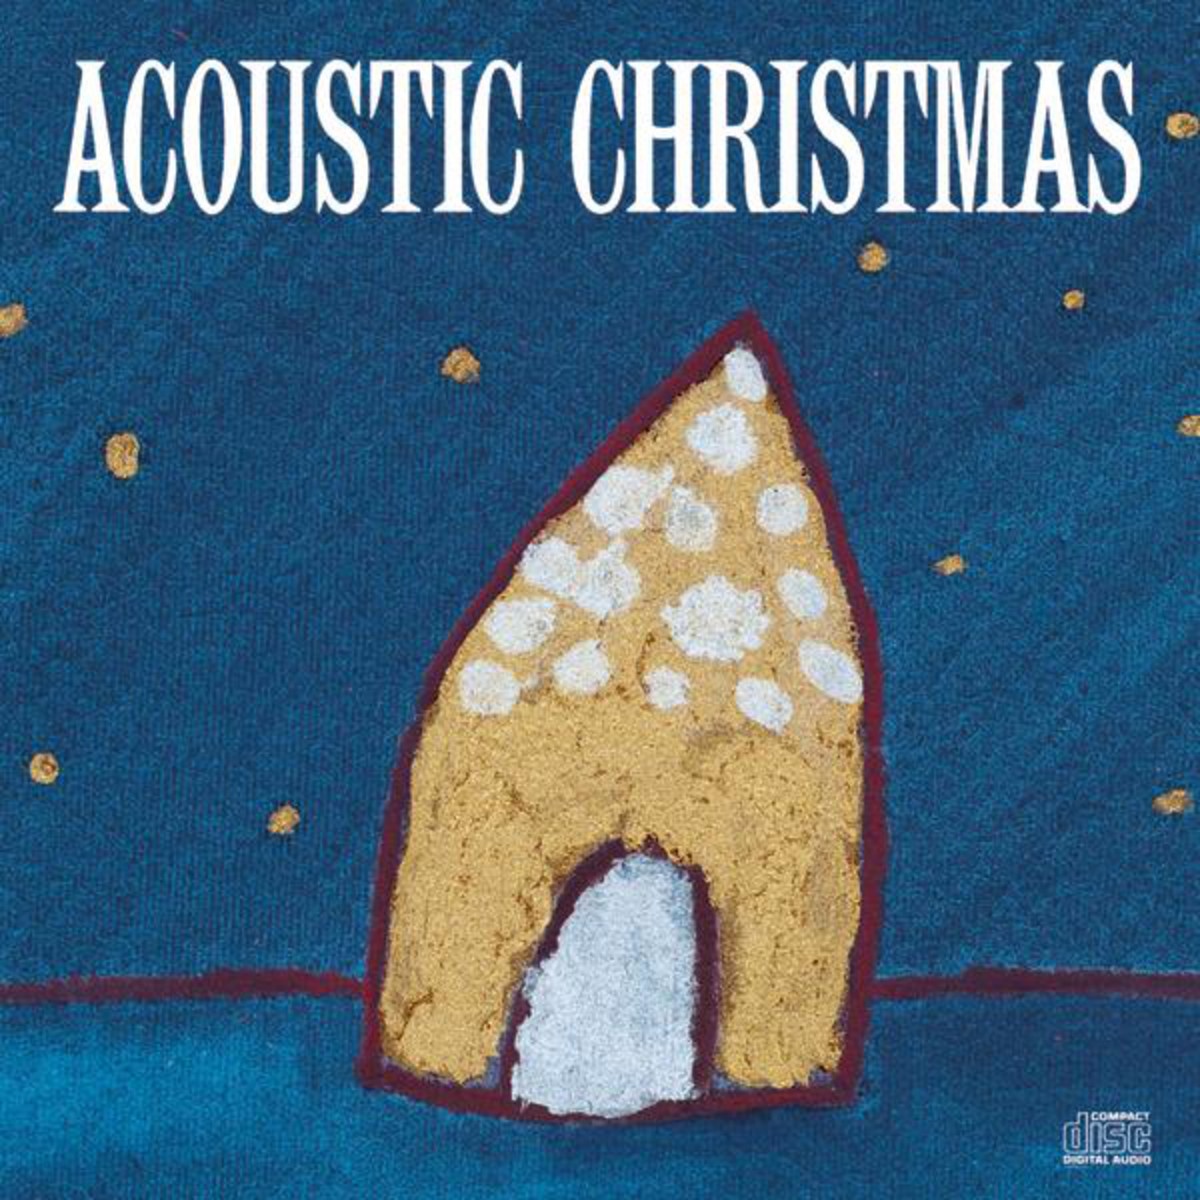 O Come, O Come, Emmanuel (Acoustic Christmas Album Version) - unplug